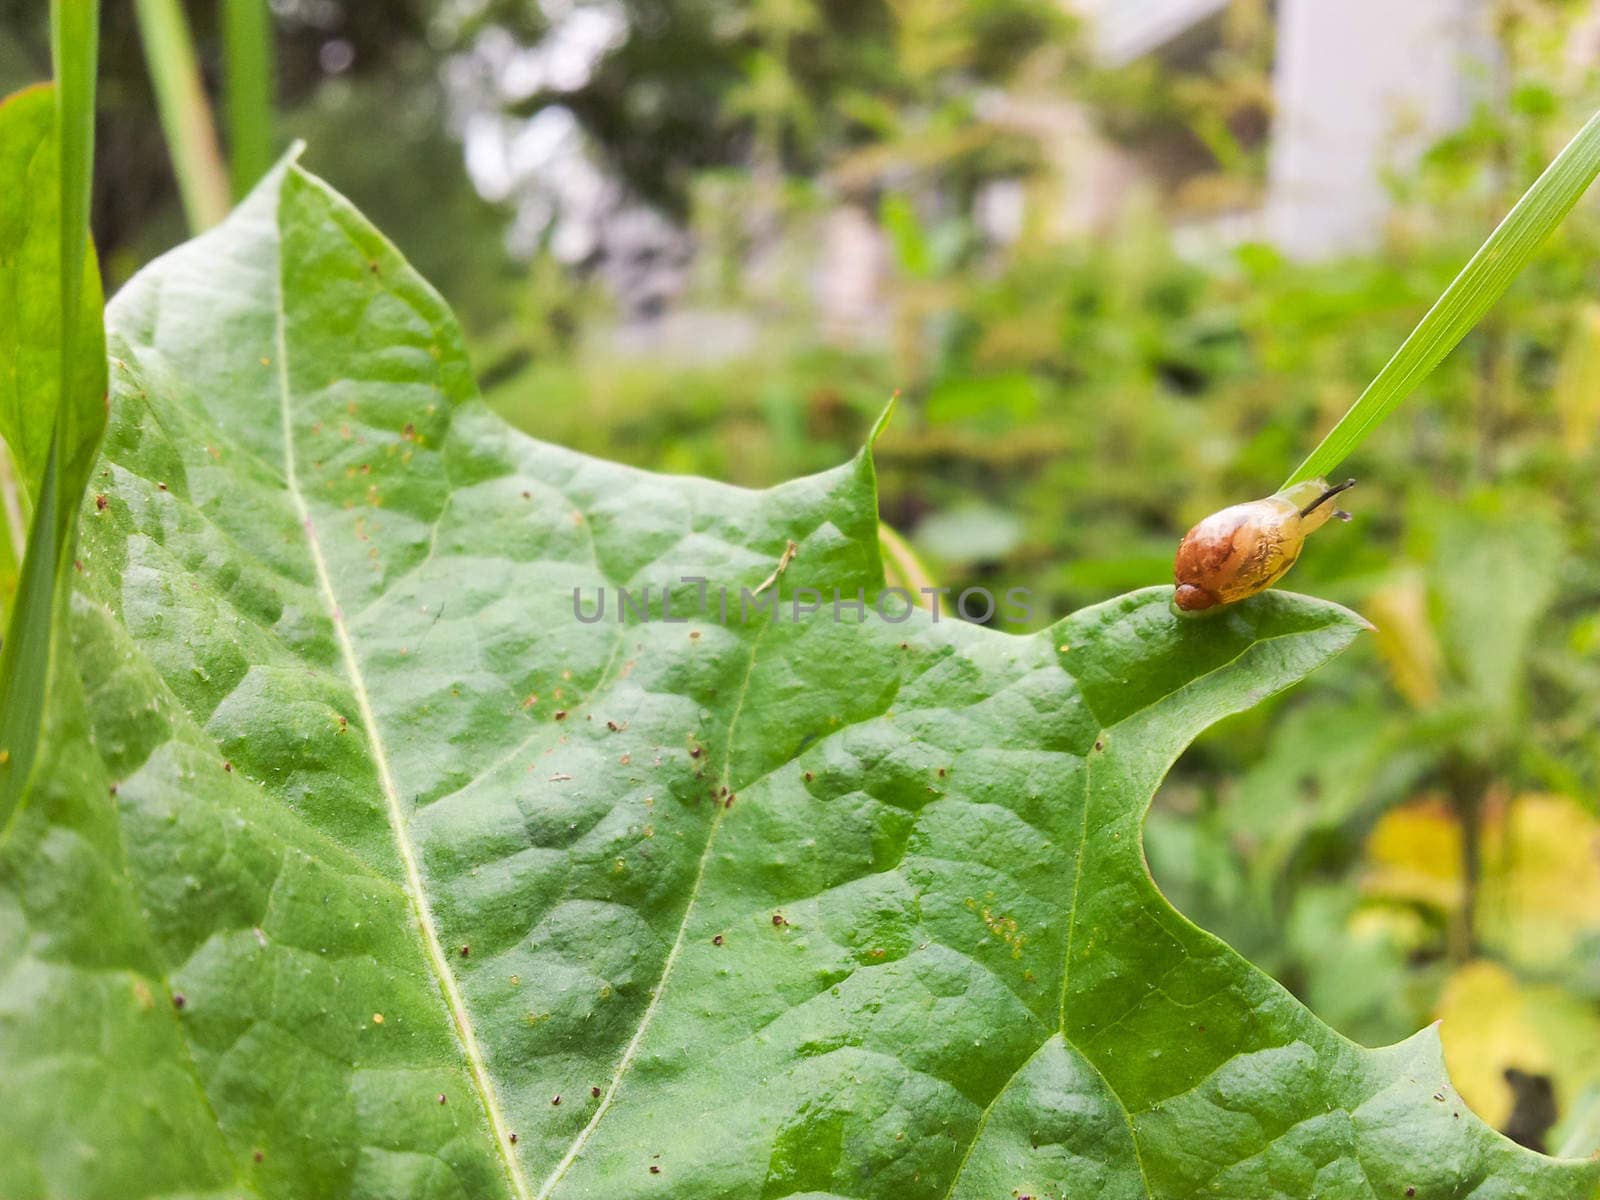 Baby snail on leaf by Arvebettum